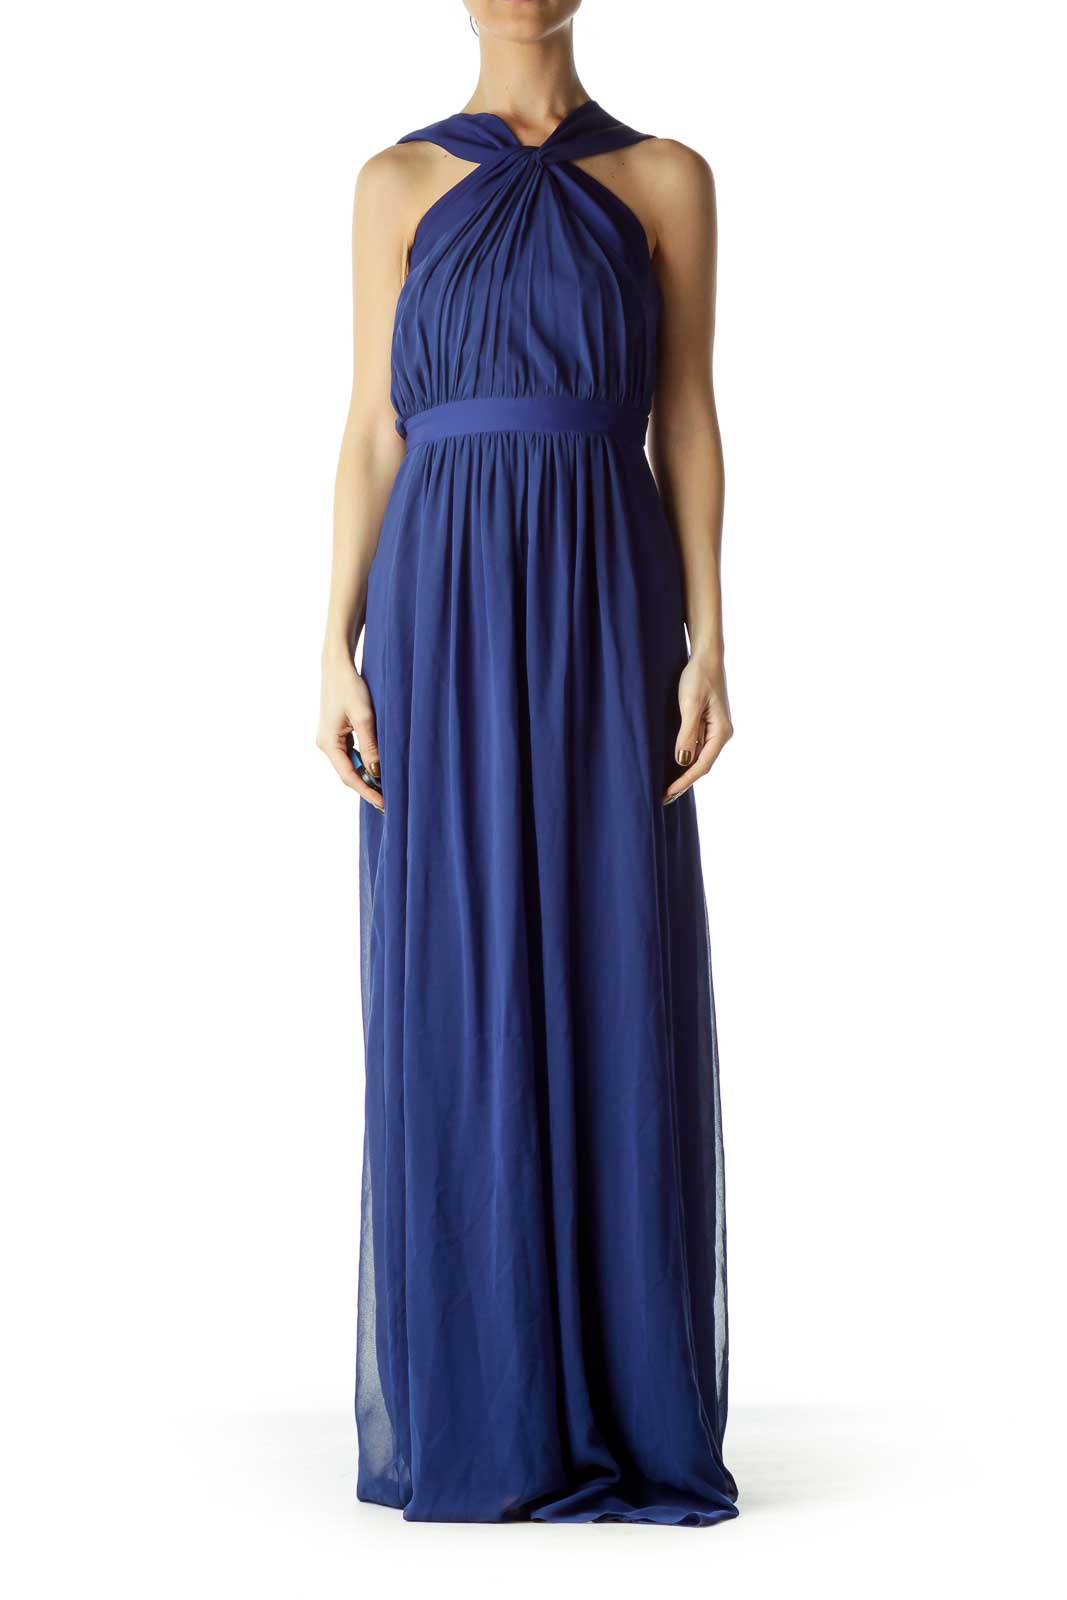 BCBG MaxAzria - Blue Scrunched Sheer Evening Dress Unknown | SilkRoll